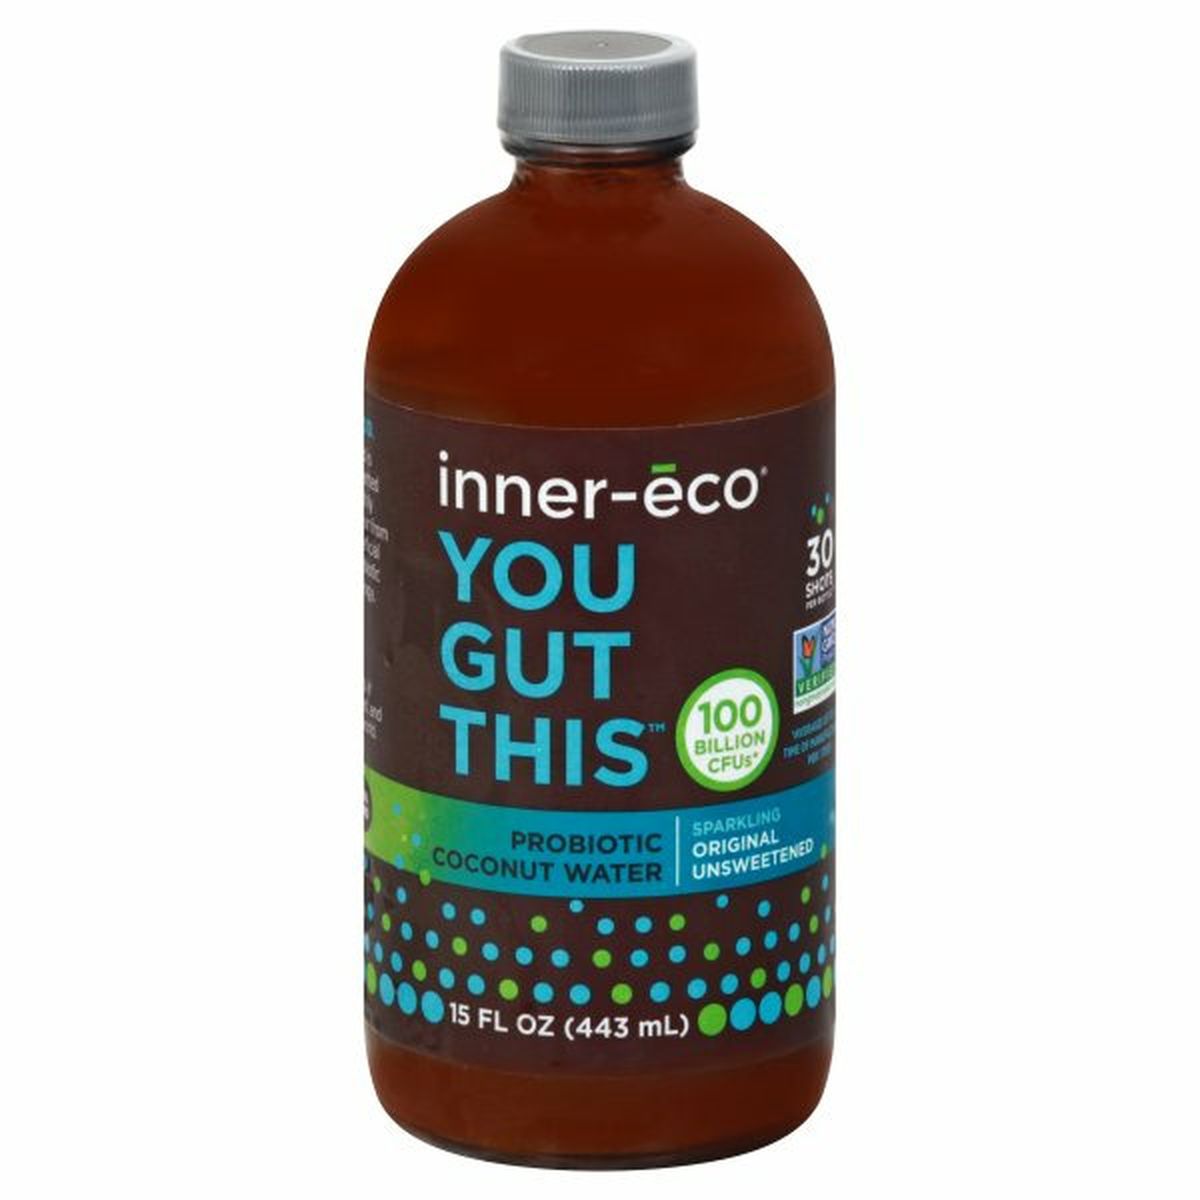 Calories in Inner Eco Probiotic Coconut Water, Sparkling Original, Unsweetened